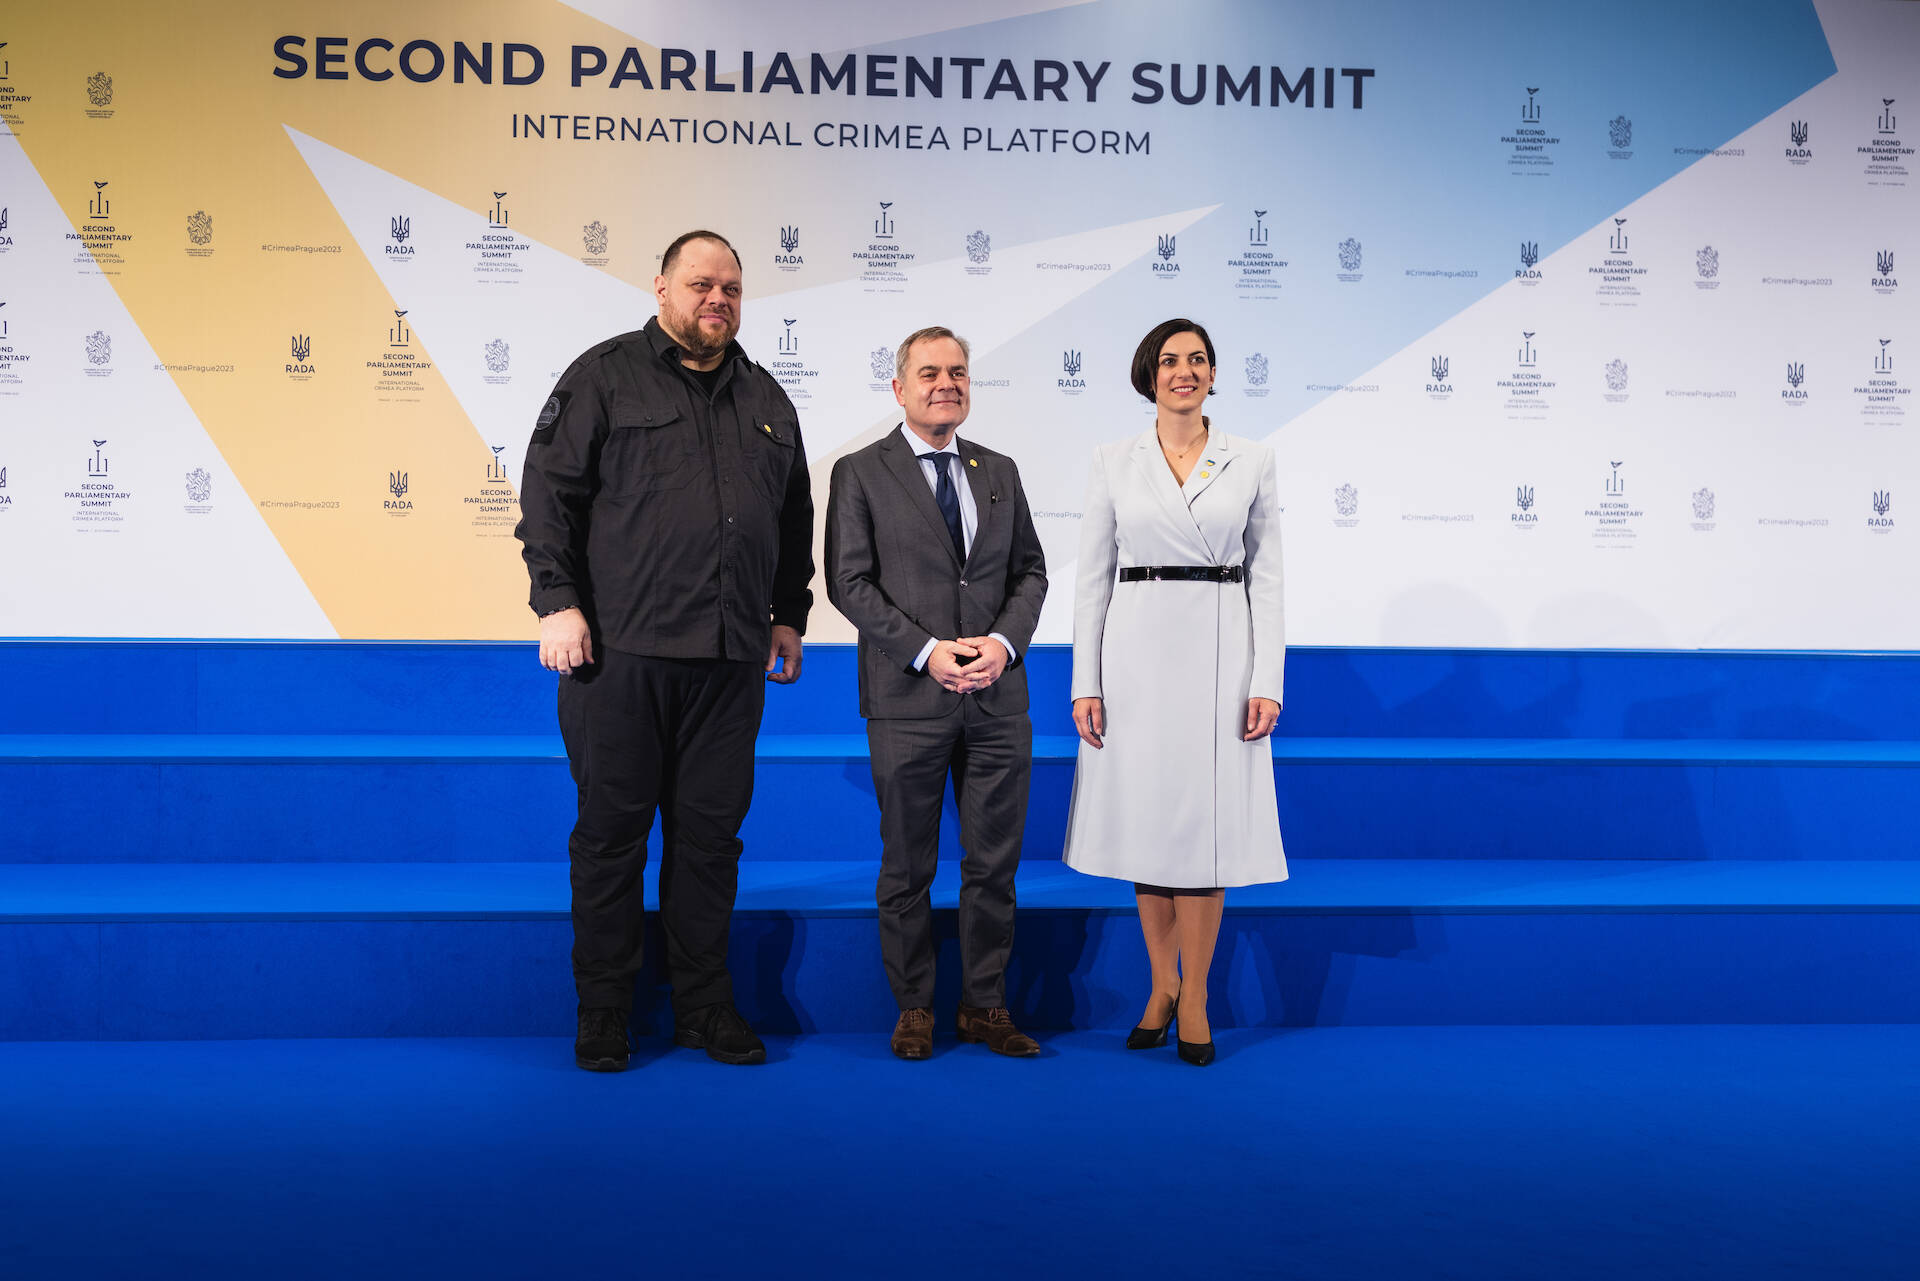 VVD-senator Koen Petersen (m) met Ruslan Stefanchuk, voorzitter parlement Oekraïne (l) en Markéta Pekarová Adamová, voorzitter Kamer van Afgevaardigden Tsjechië